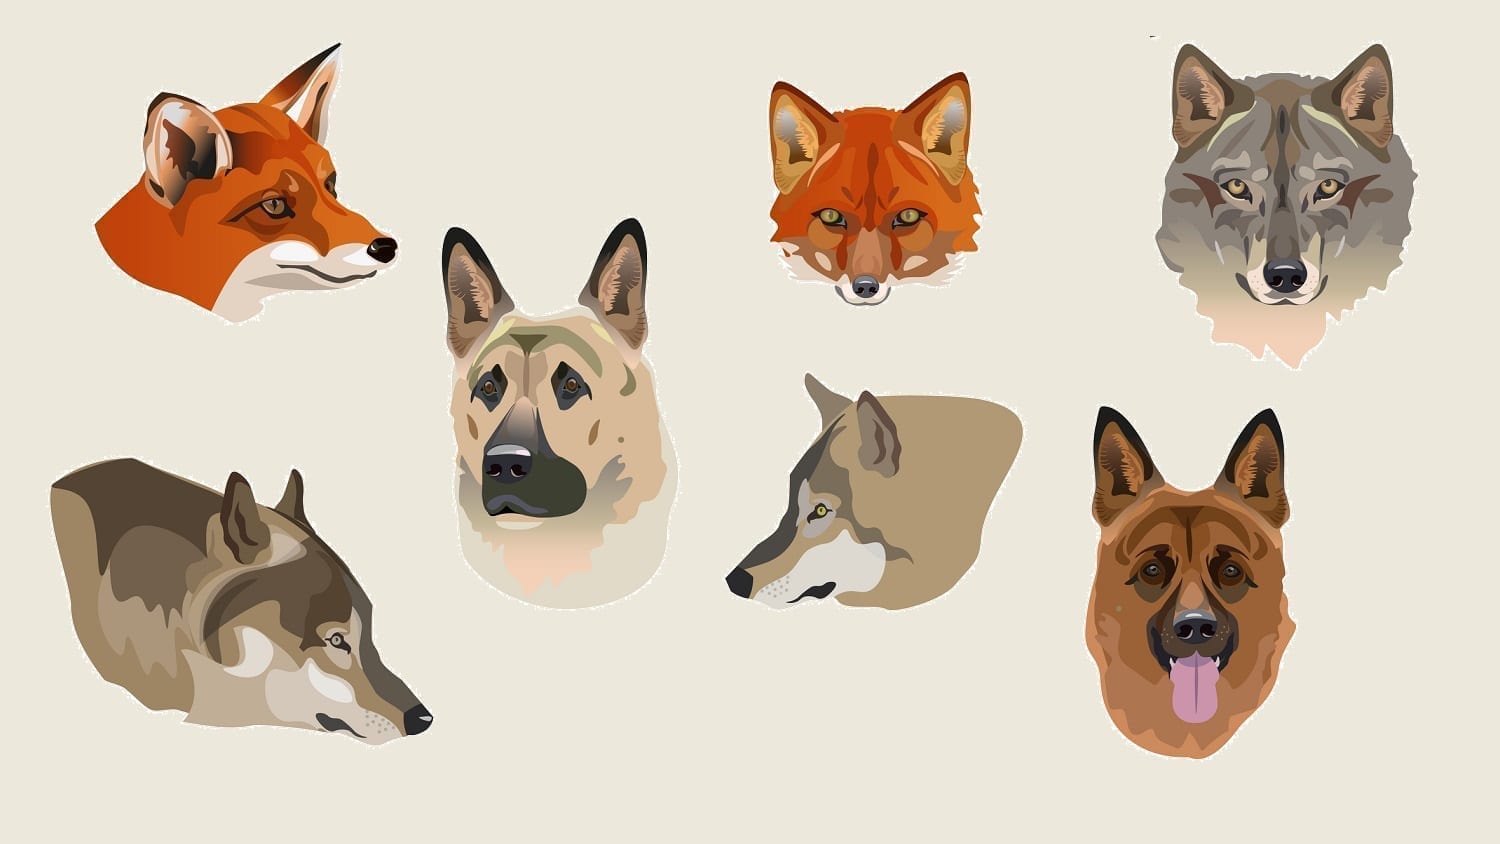 Artwork showing foxes, wolves, and dogs: Illustration 135375950 © Hhurzhi | Dreamstime.com